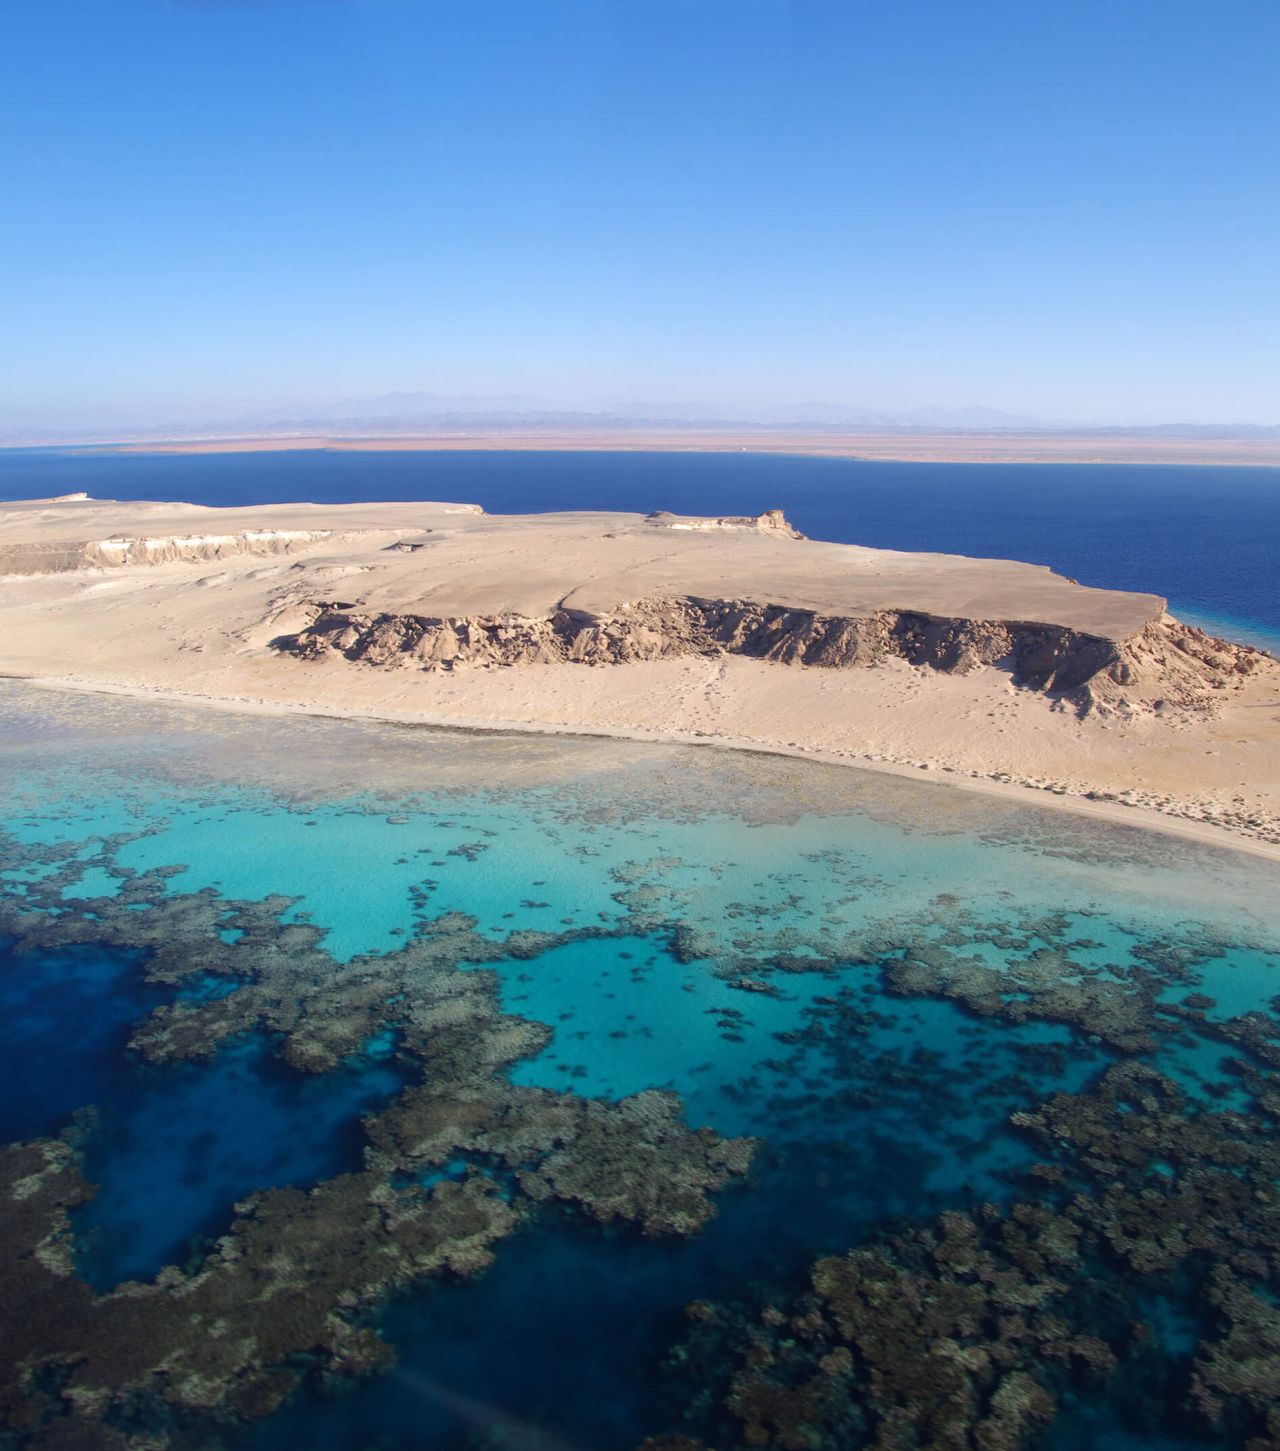 Saudi Arabia's Red Sea coast stretches for more than 1,000 miles.